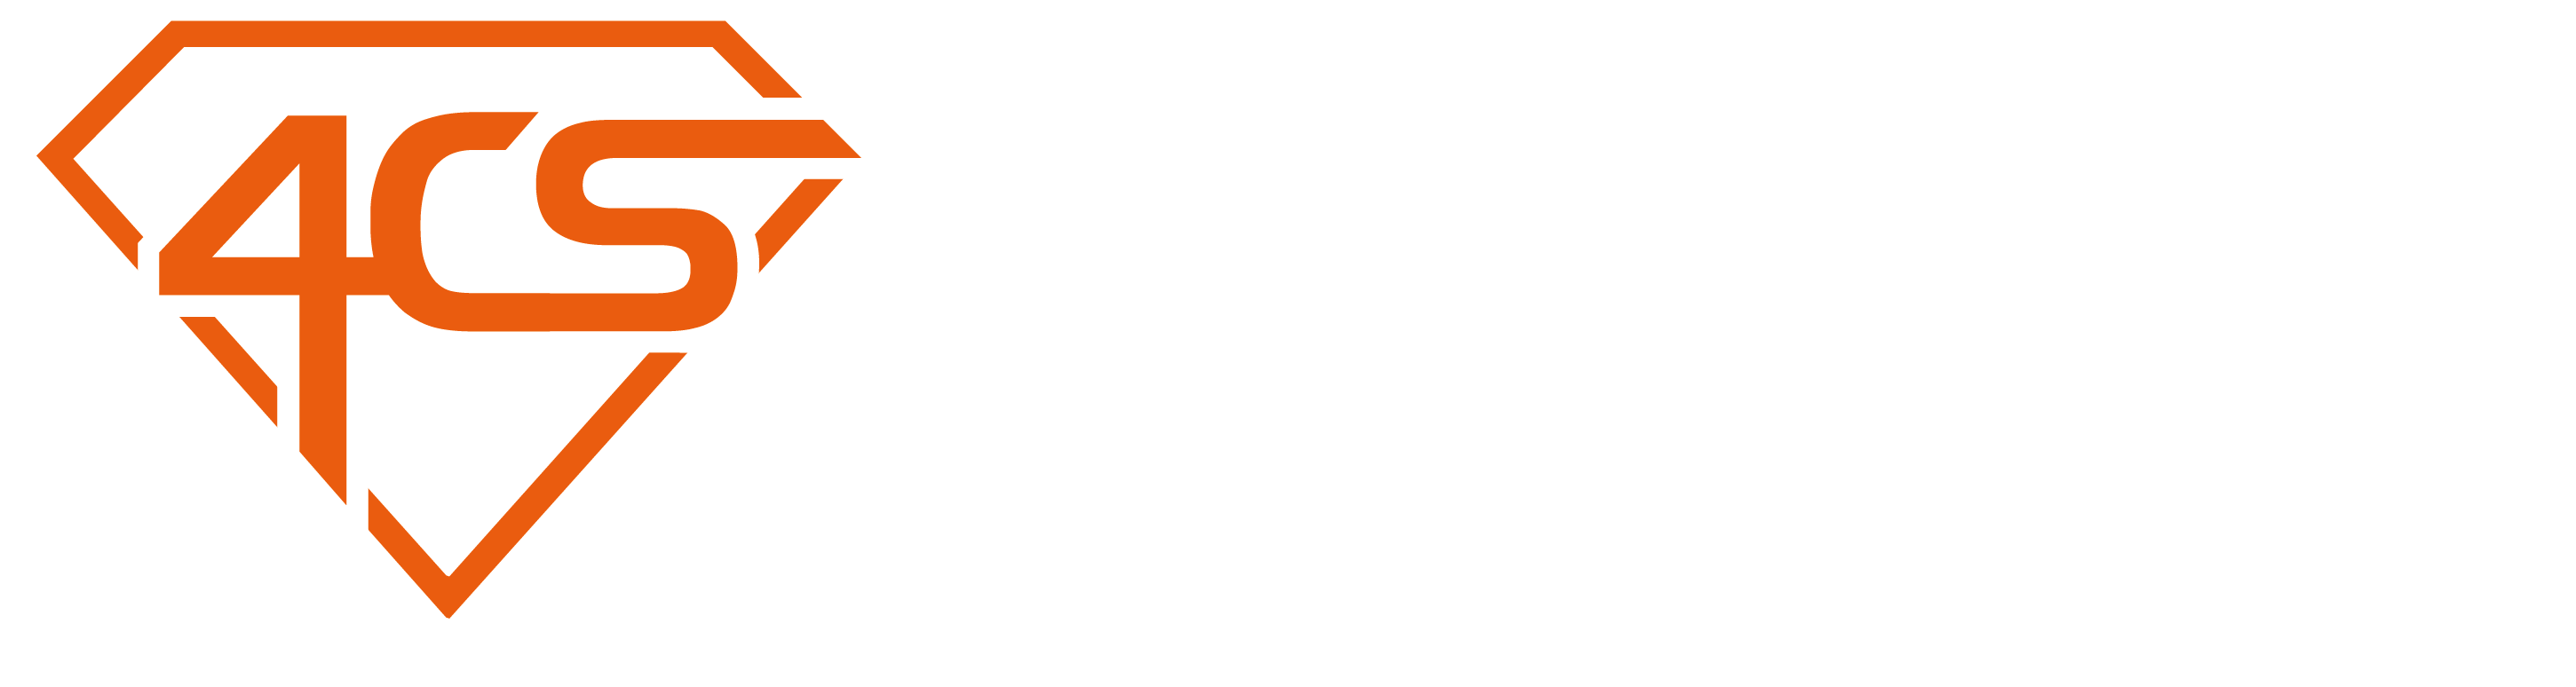 4CS-Security